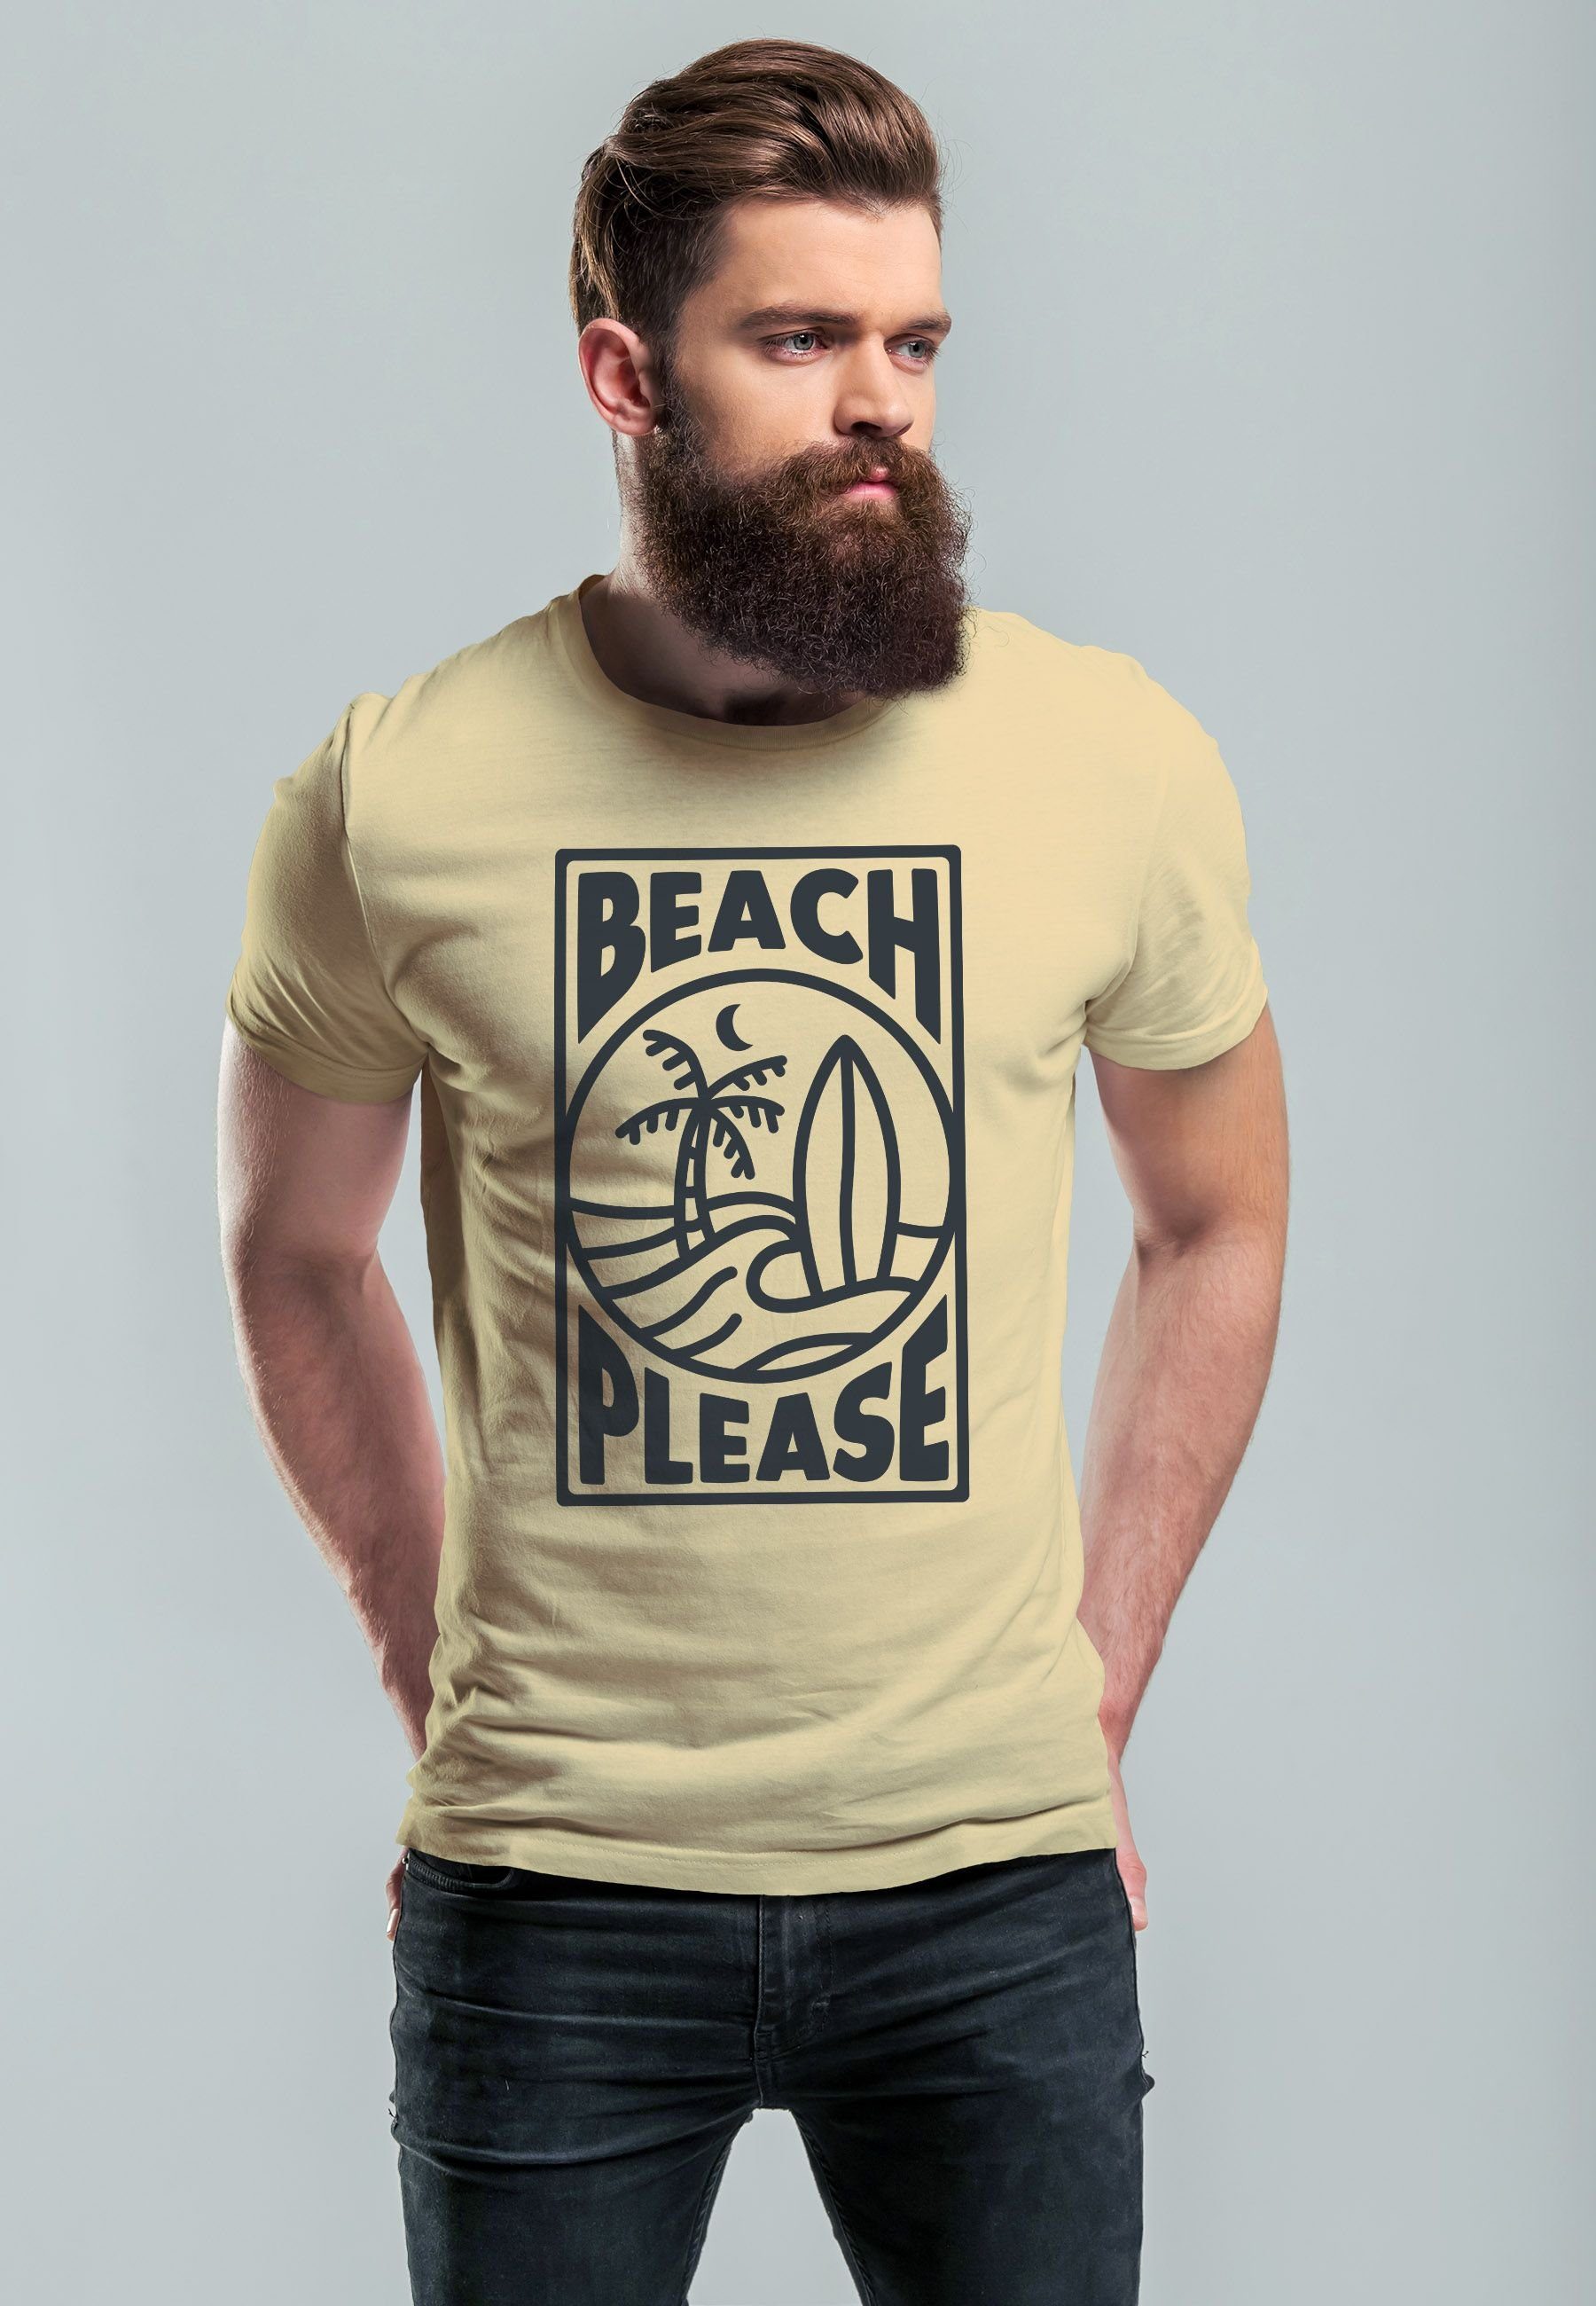 Welle Print-Shirt Sommer Neverless mit Beach Surfboard Herren natur Please T-Shirt Print Print Wave Surfing